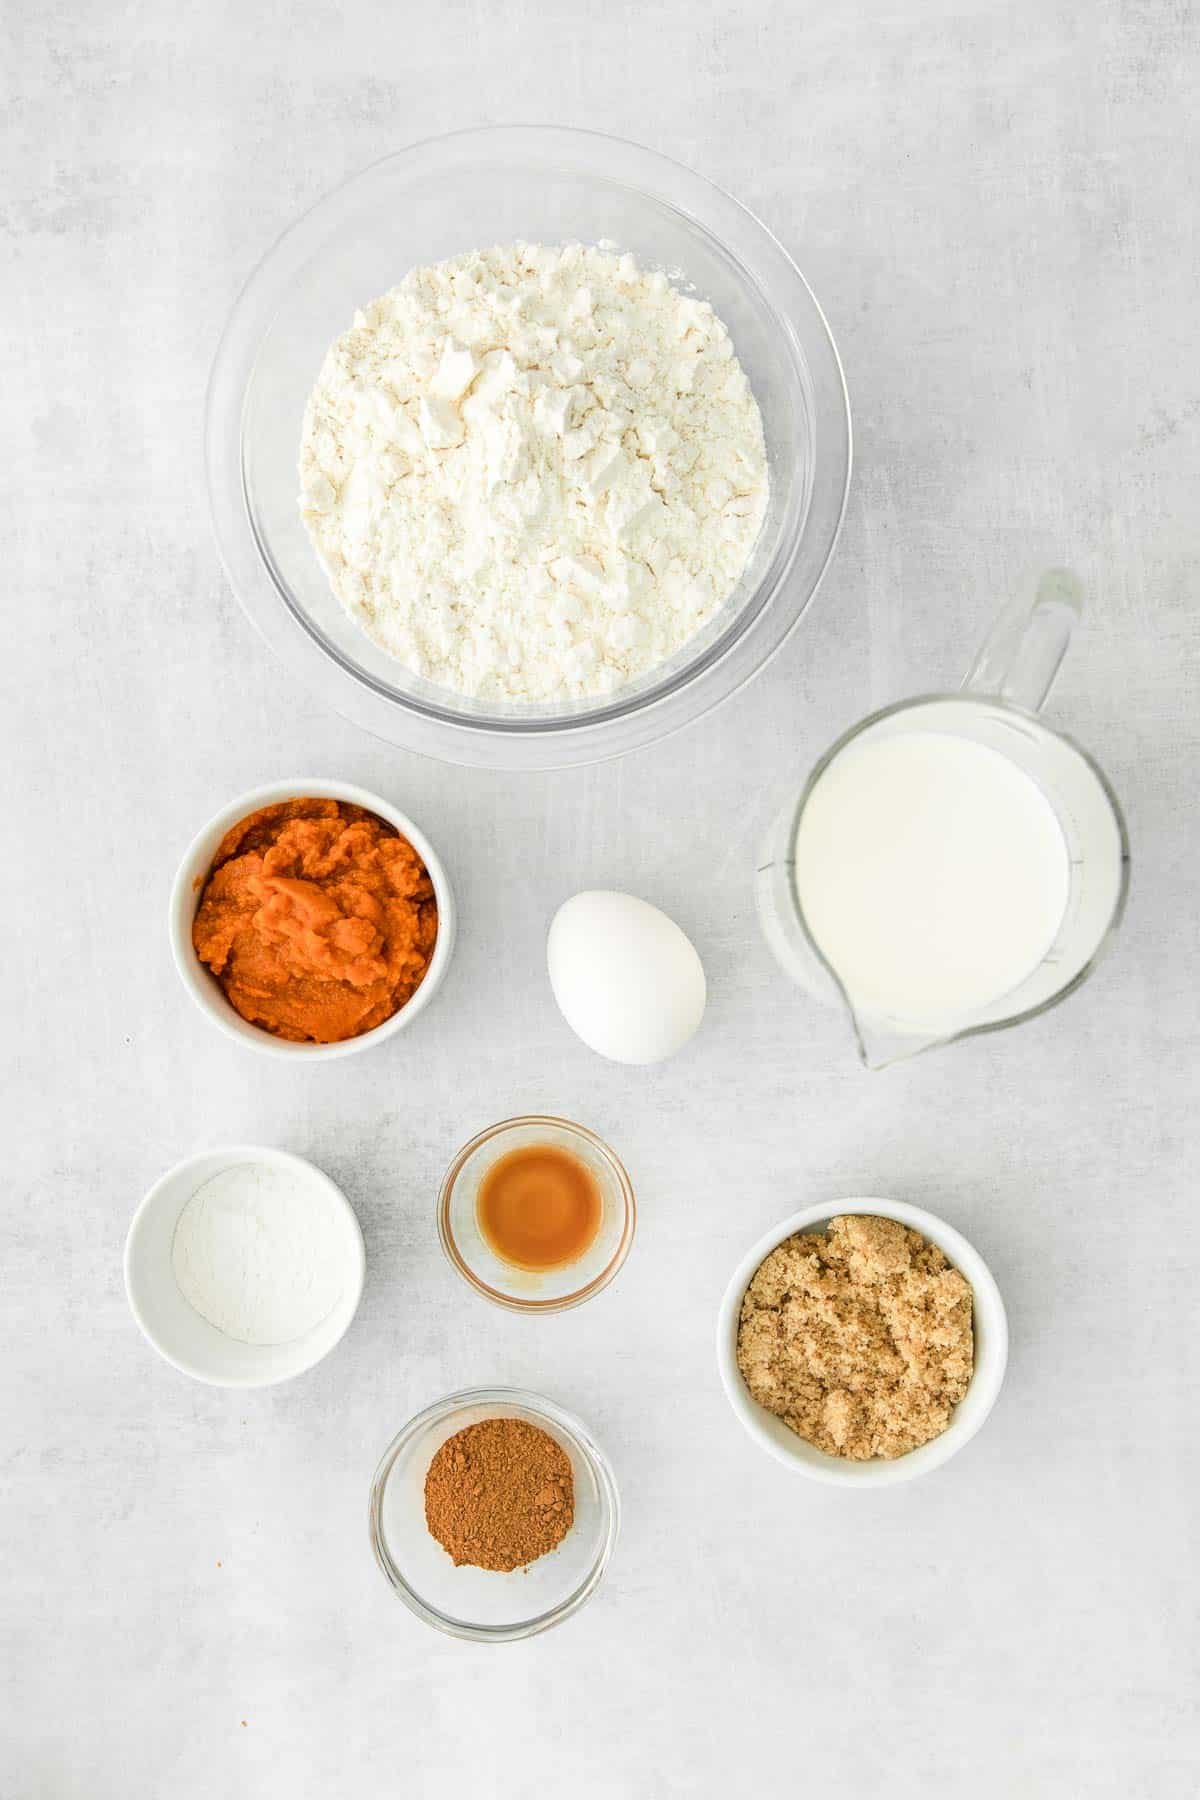 several small glass bowls with ingredients for pumpkin pancakes - flour, pumpkin puree, brown sugar, cinnamon, egg, milk, baking soda